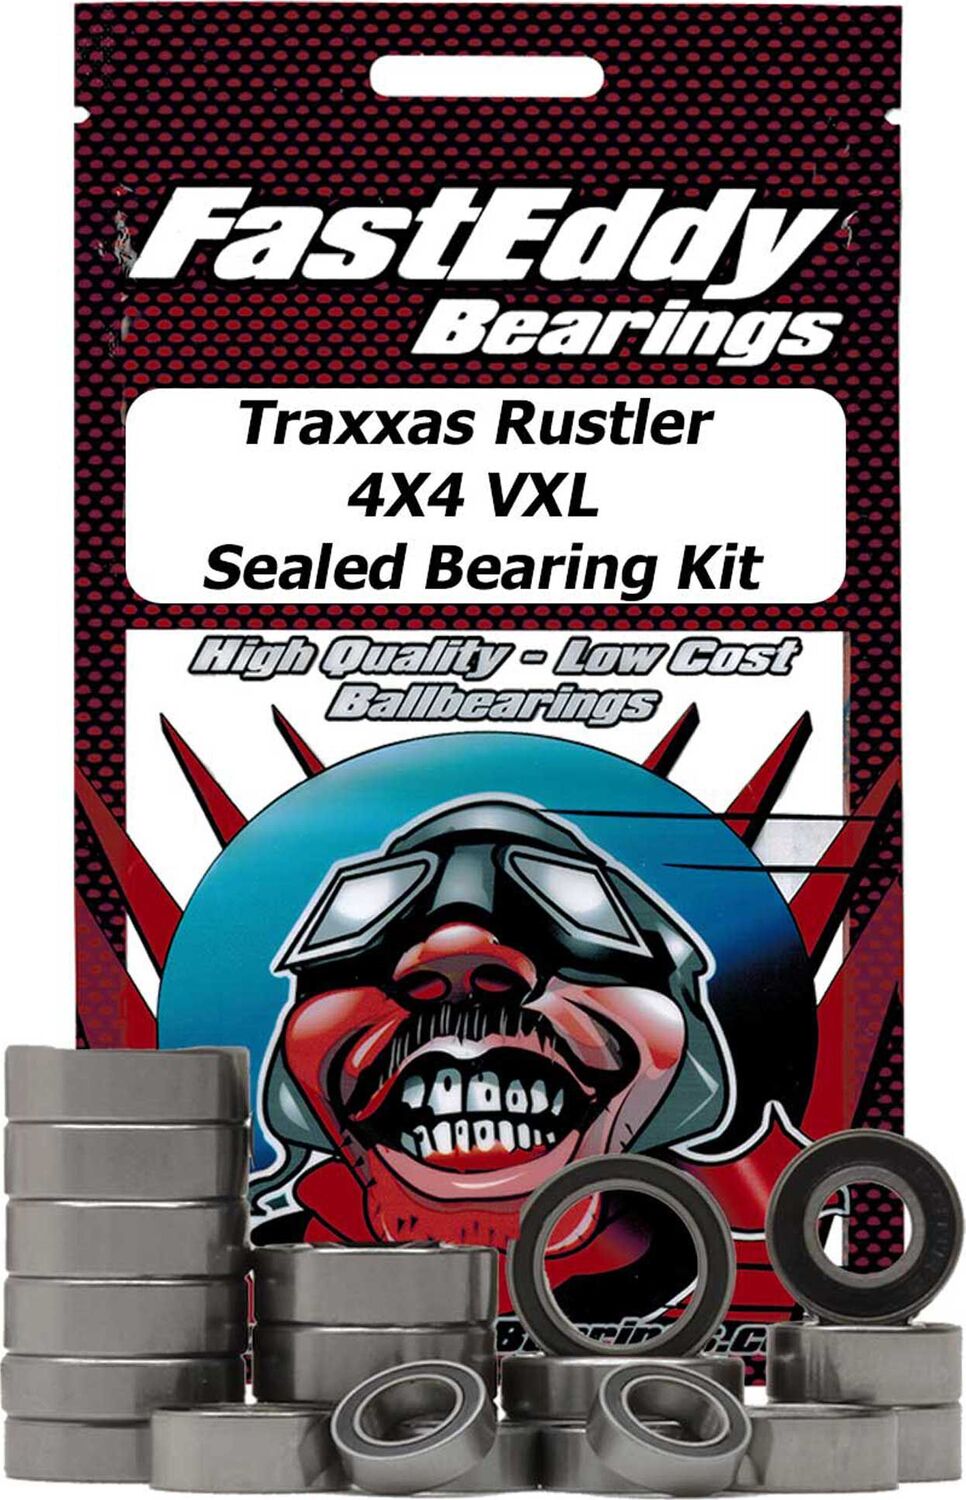 Sealed Bearing Kit: Traxxas Rustler 4X4 VXL